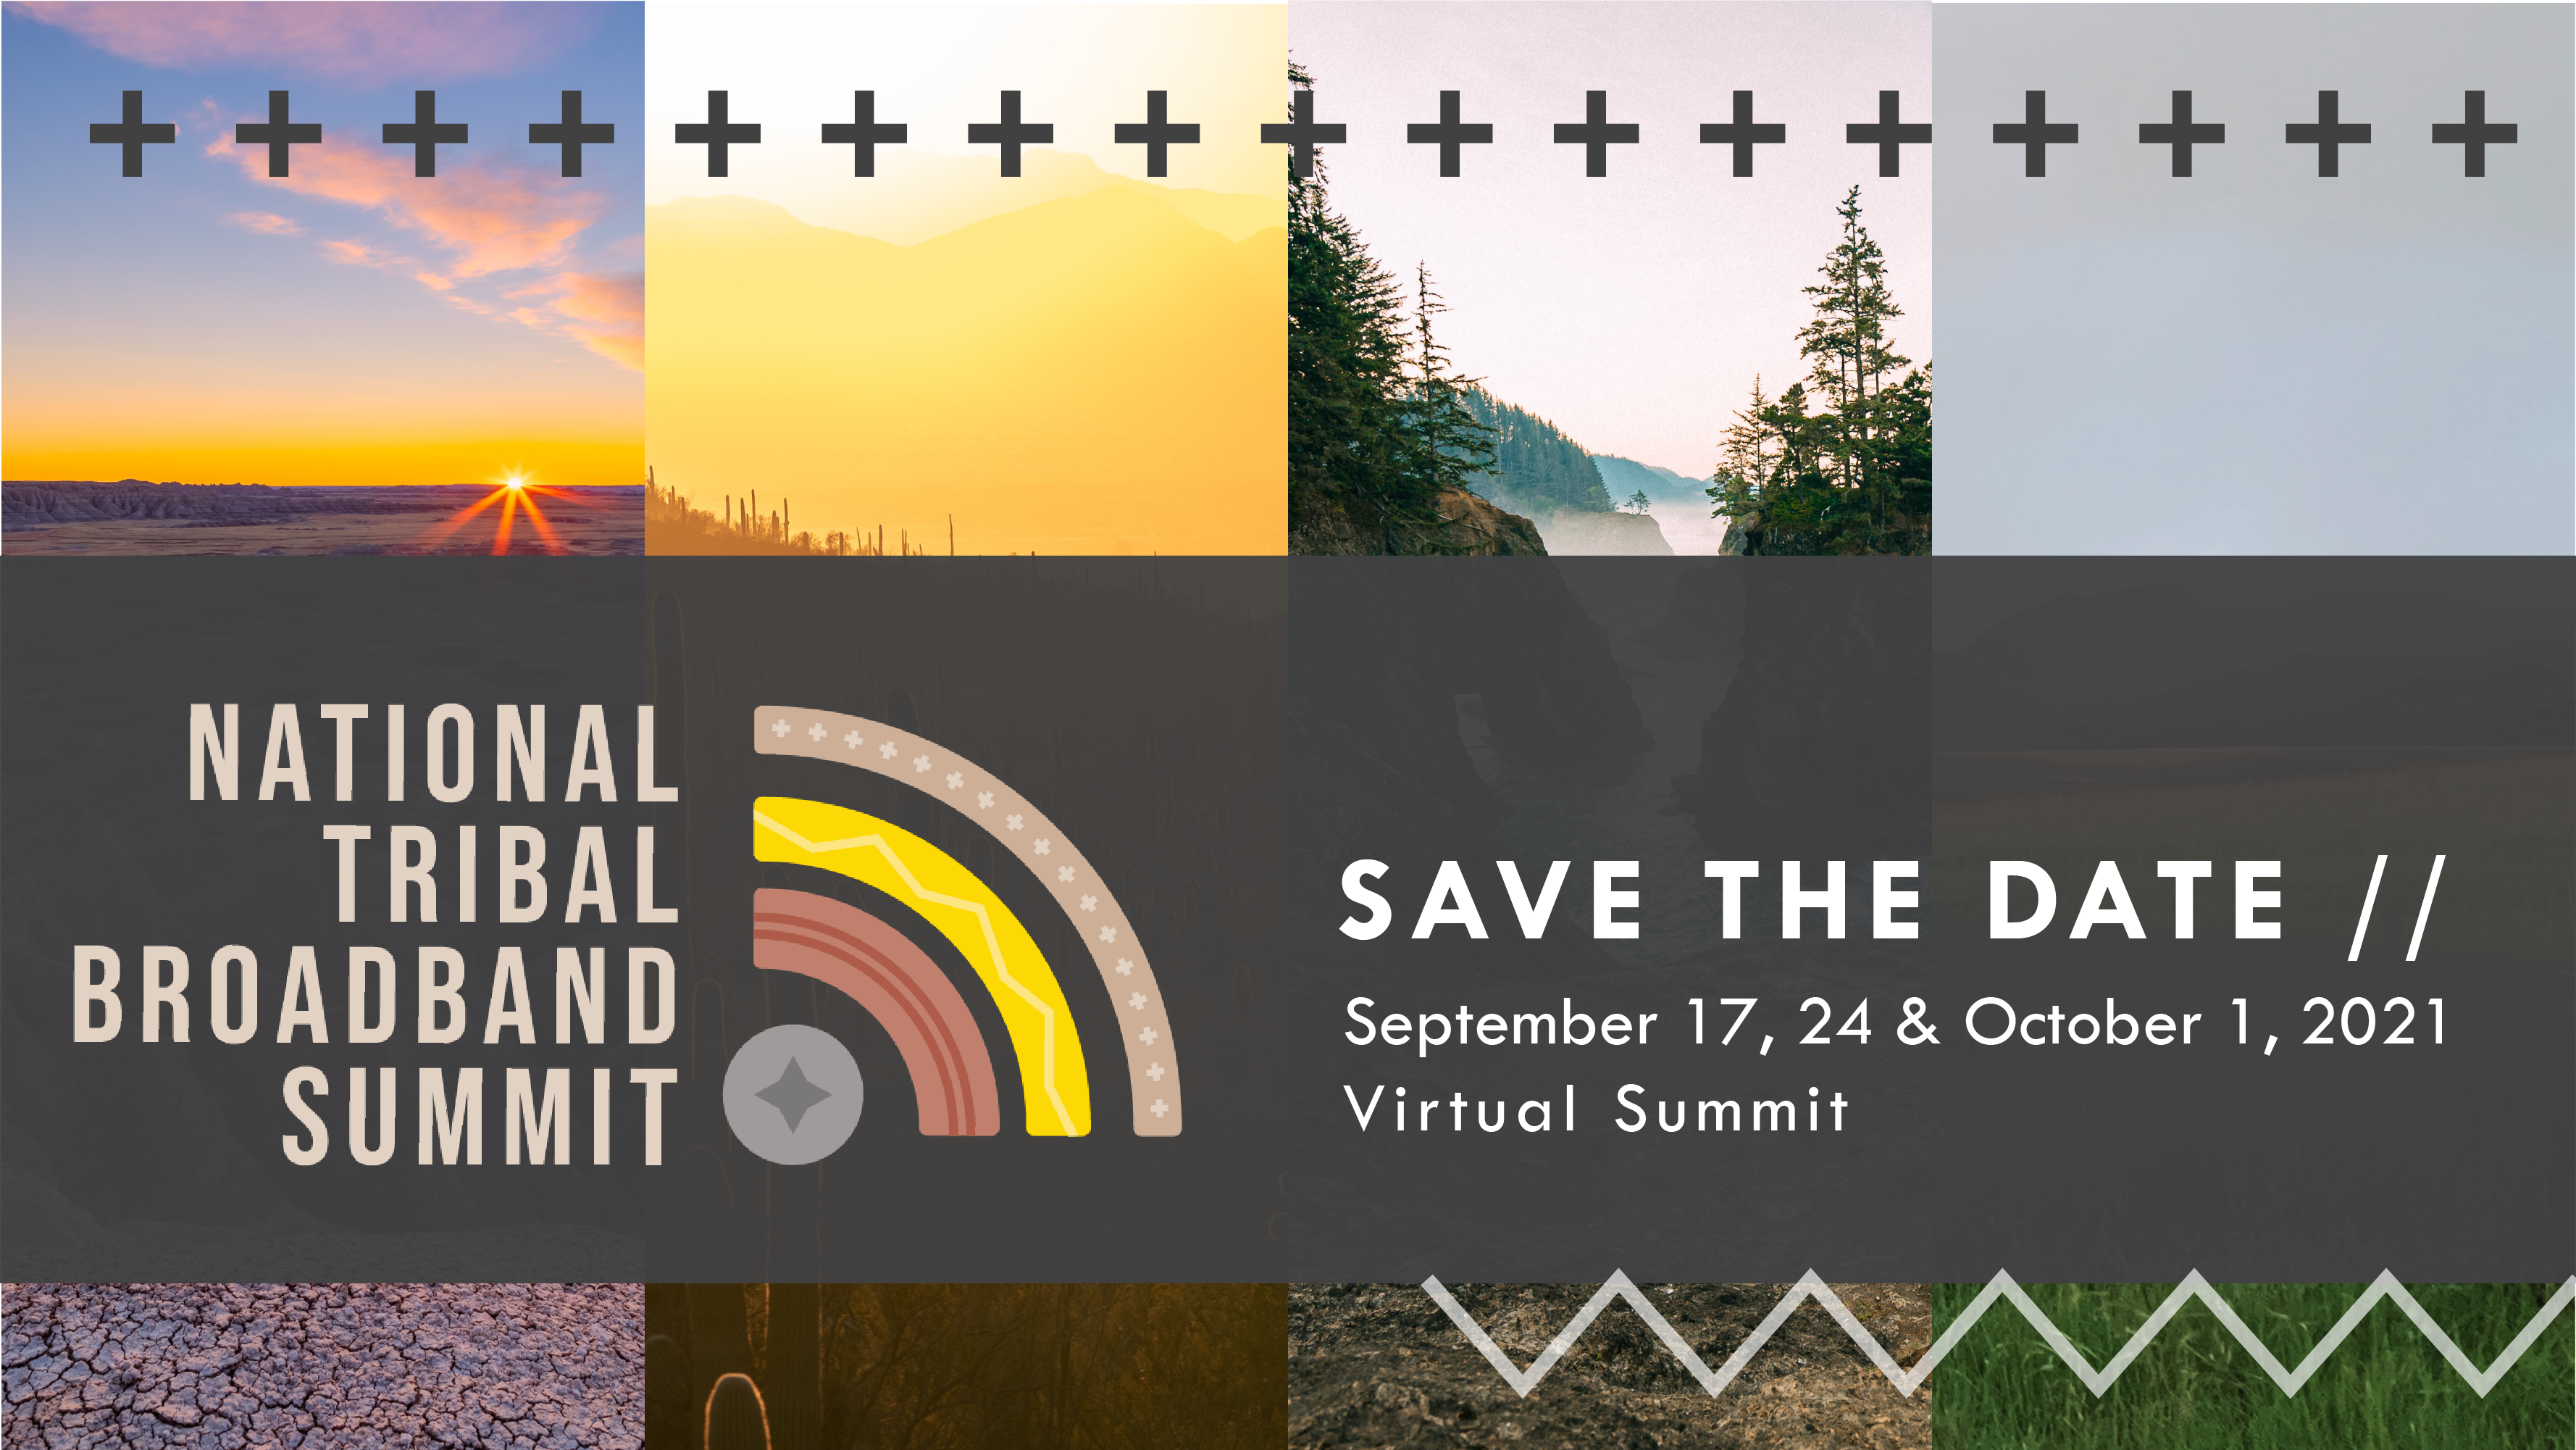 National Tribal Broadband Summit 2021 Save the Date, September 17, 24, &amp; October 1, 2021, Virtual Summit